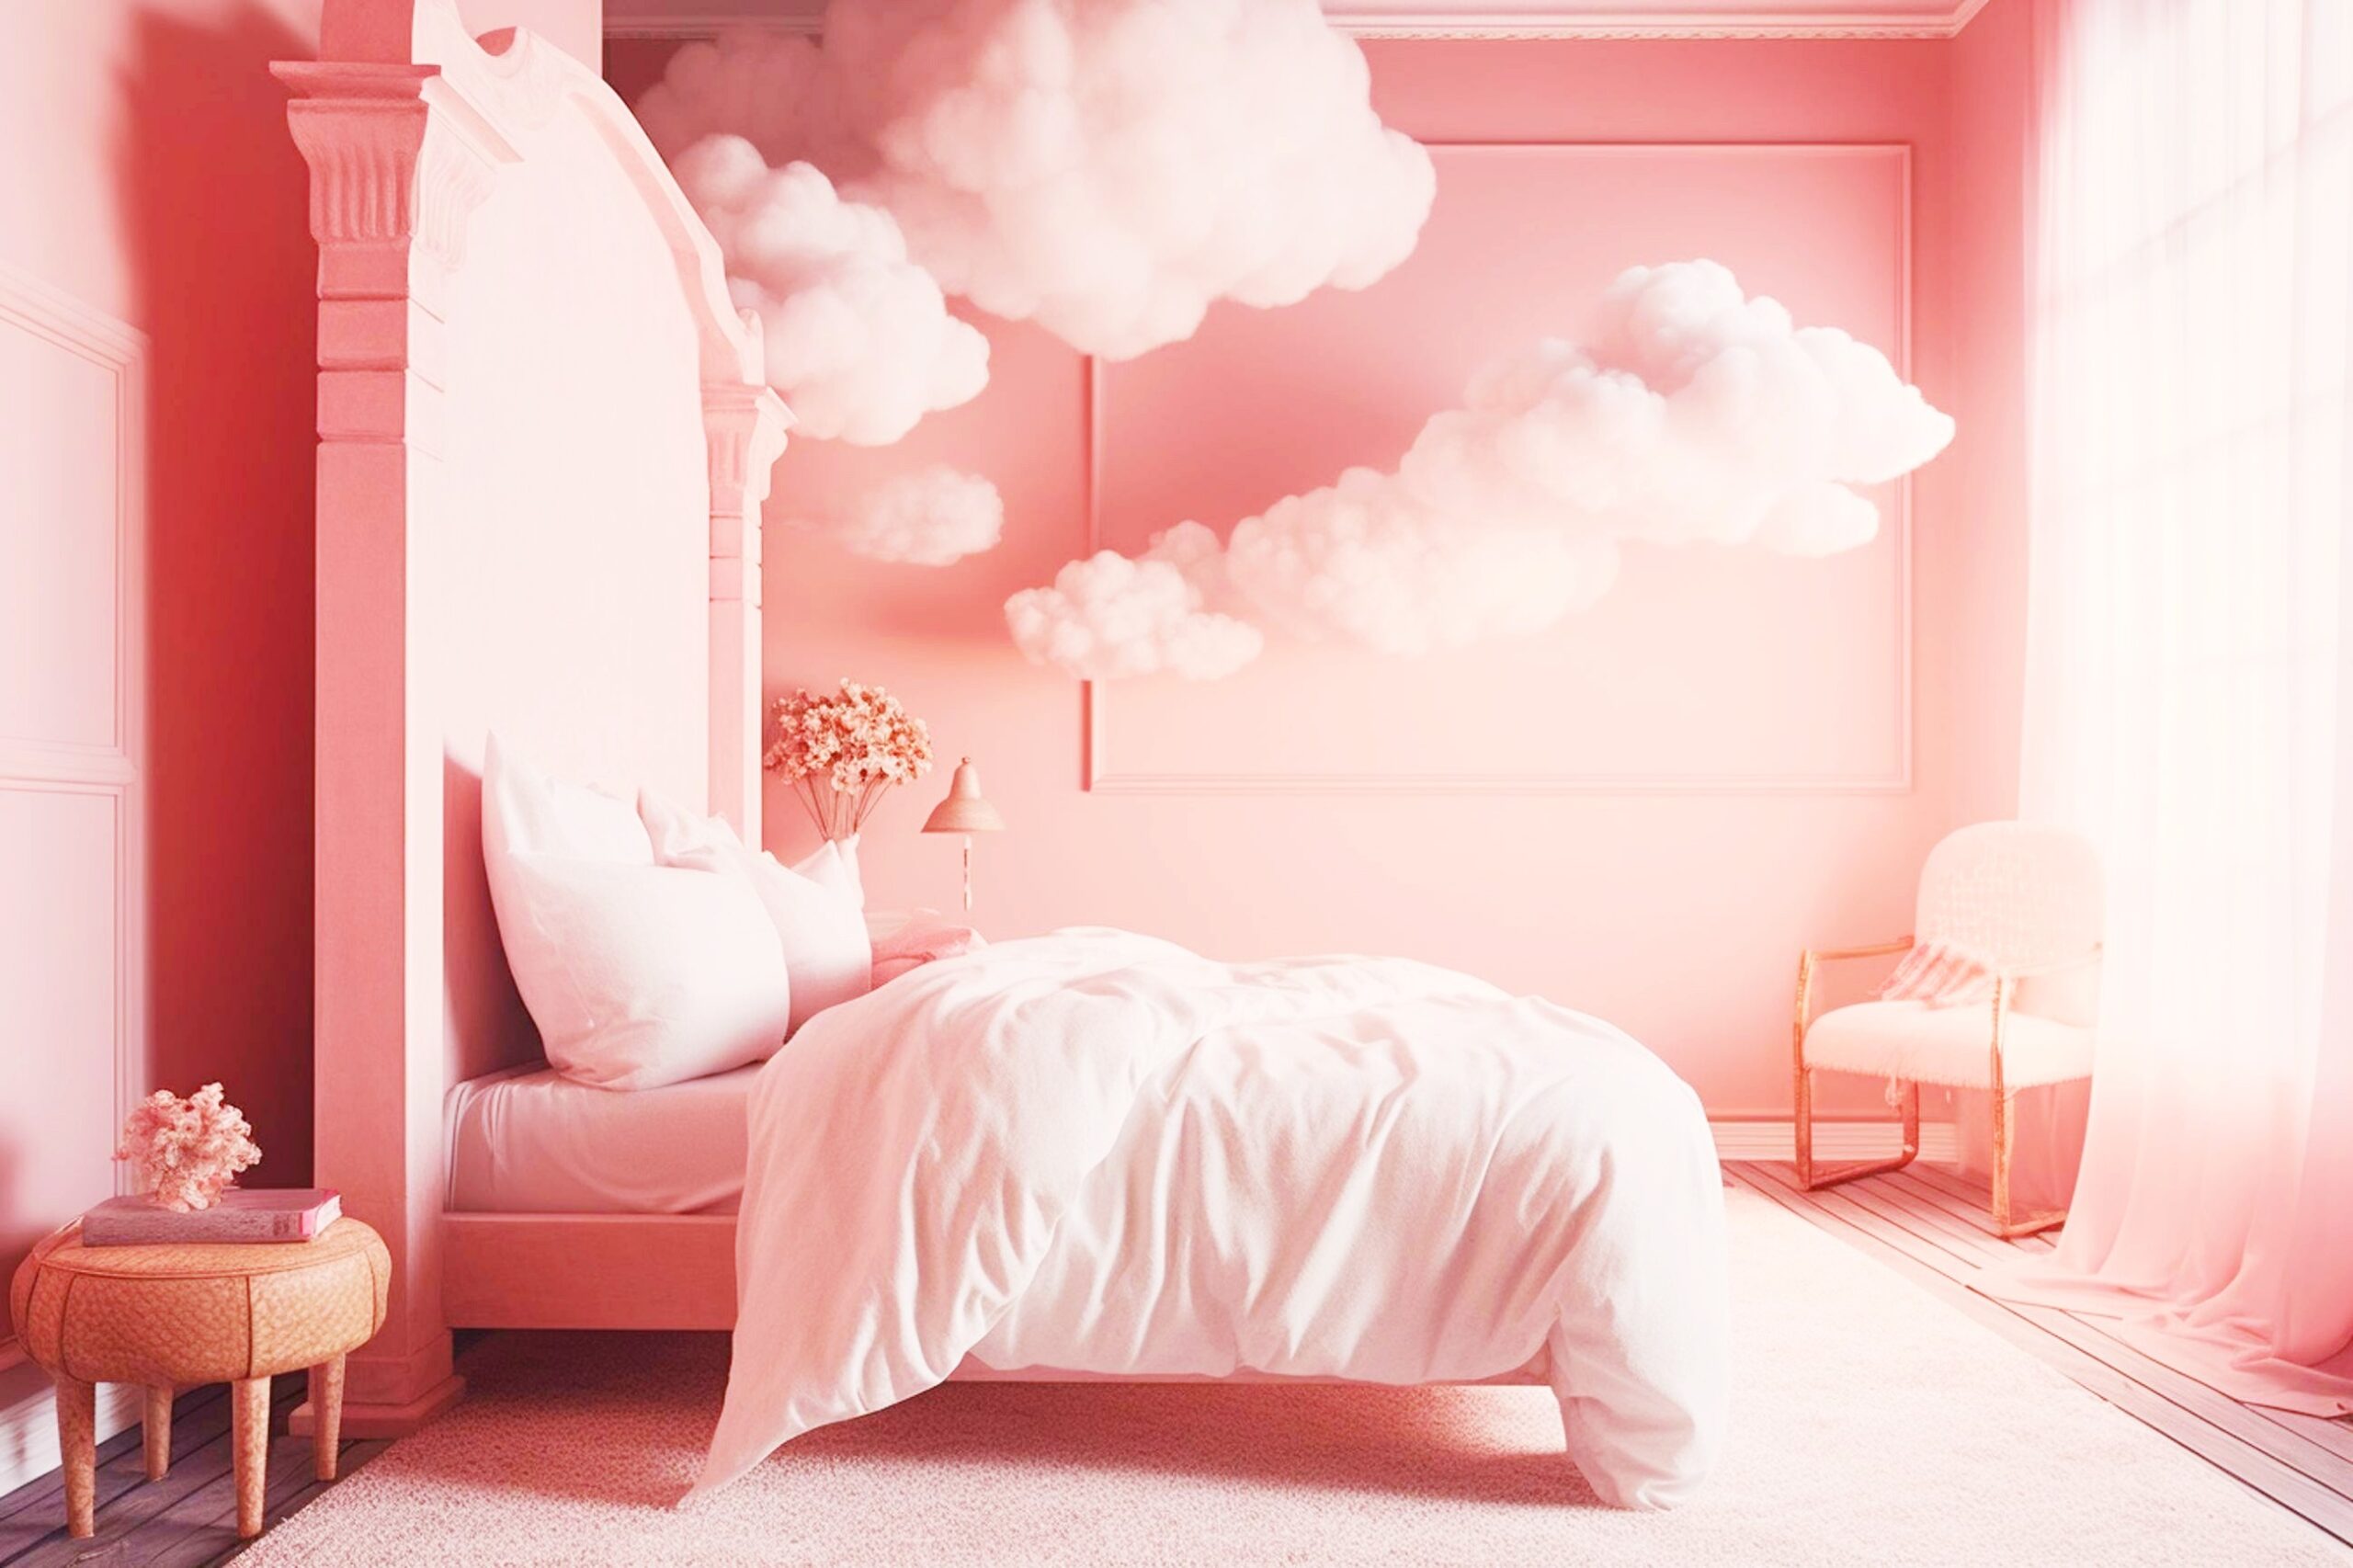 <img src="pink.jpg" alt="pink budget friendly bedroom ideas"/>